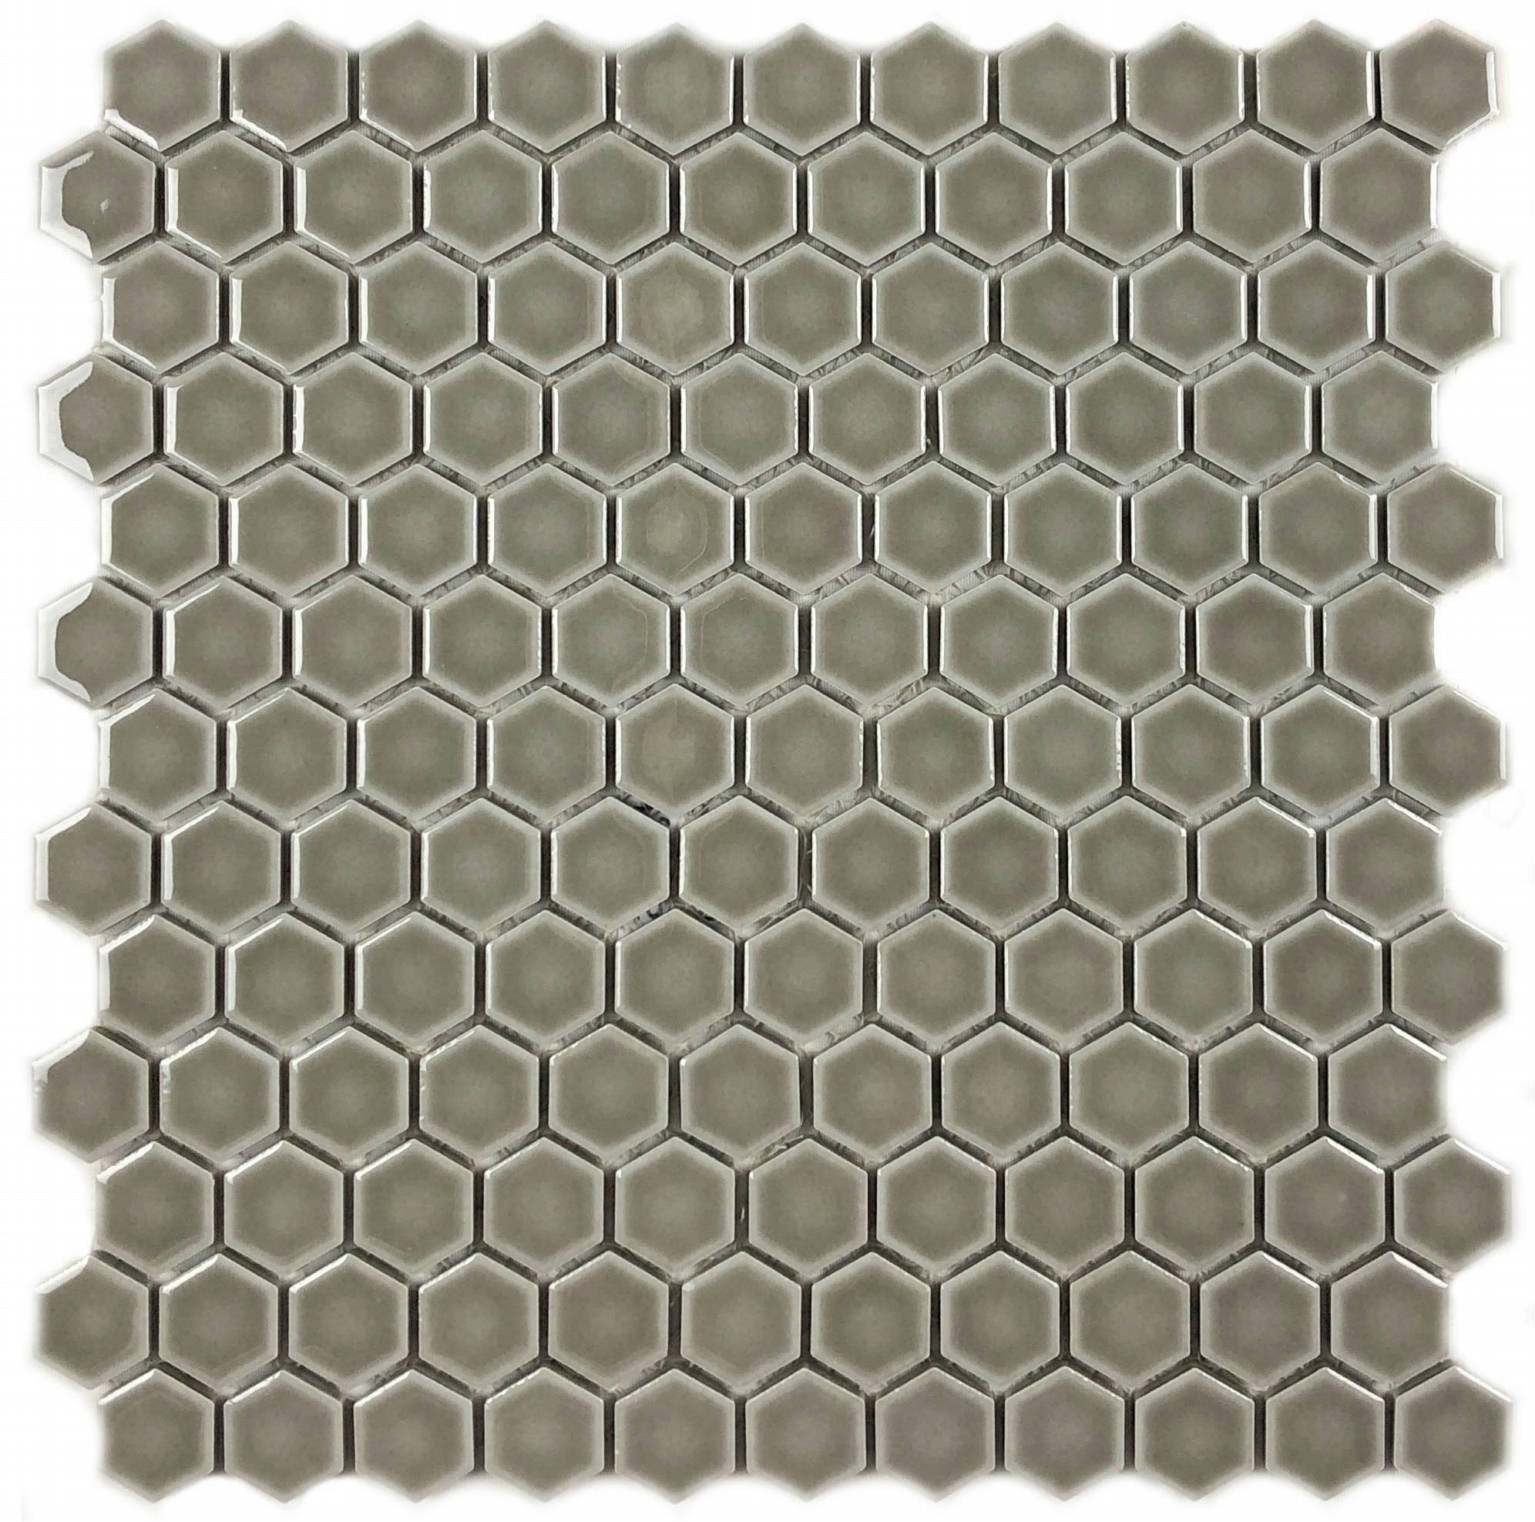 Hexagons 1” Mosaic | Adex USA